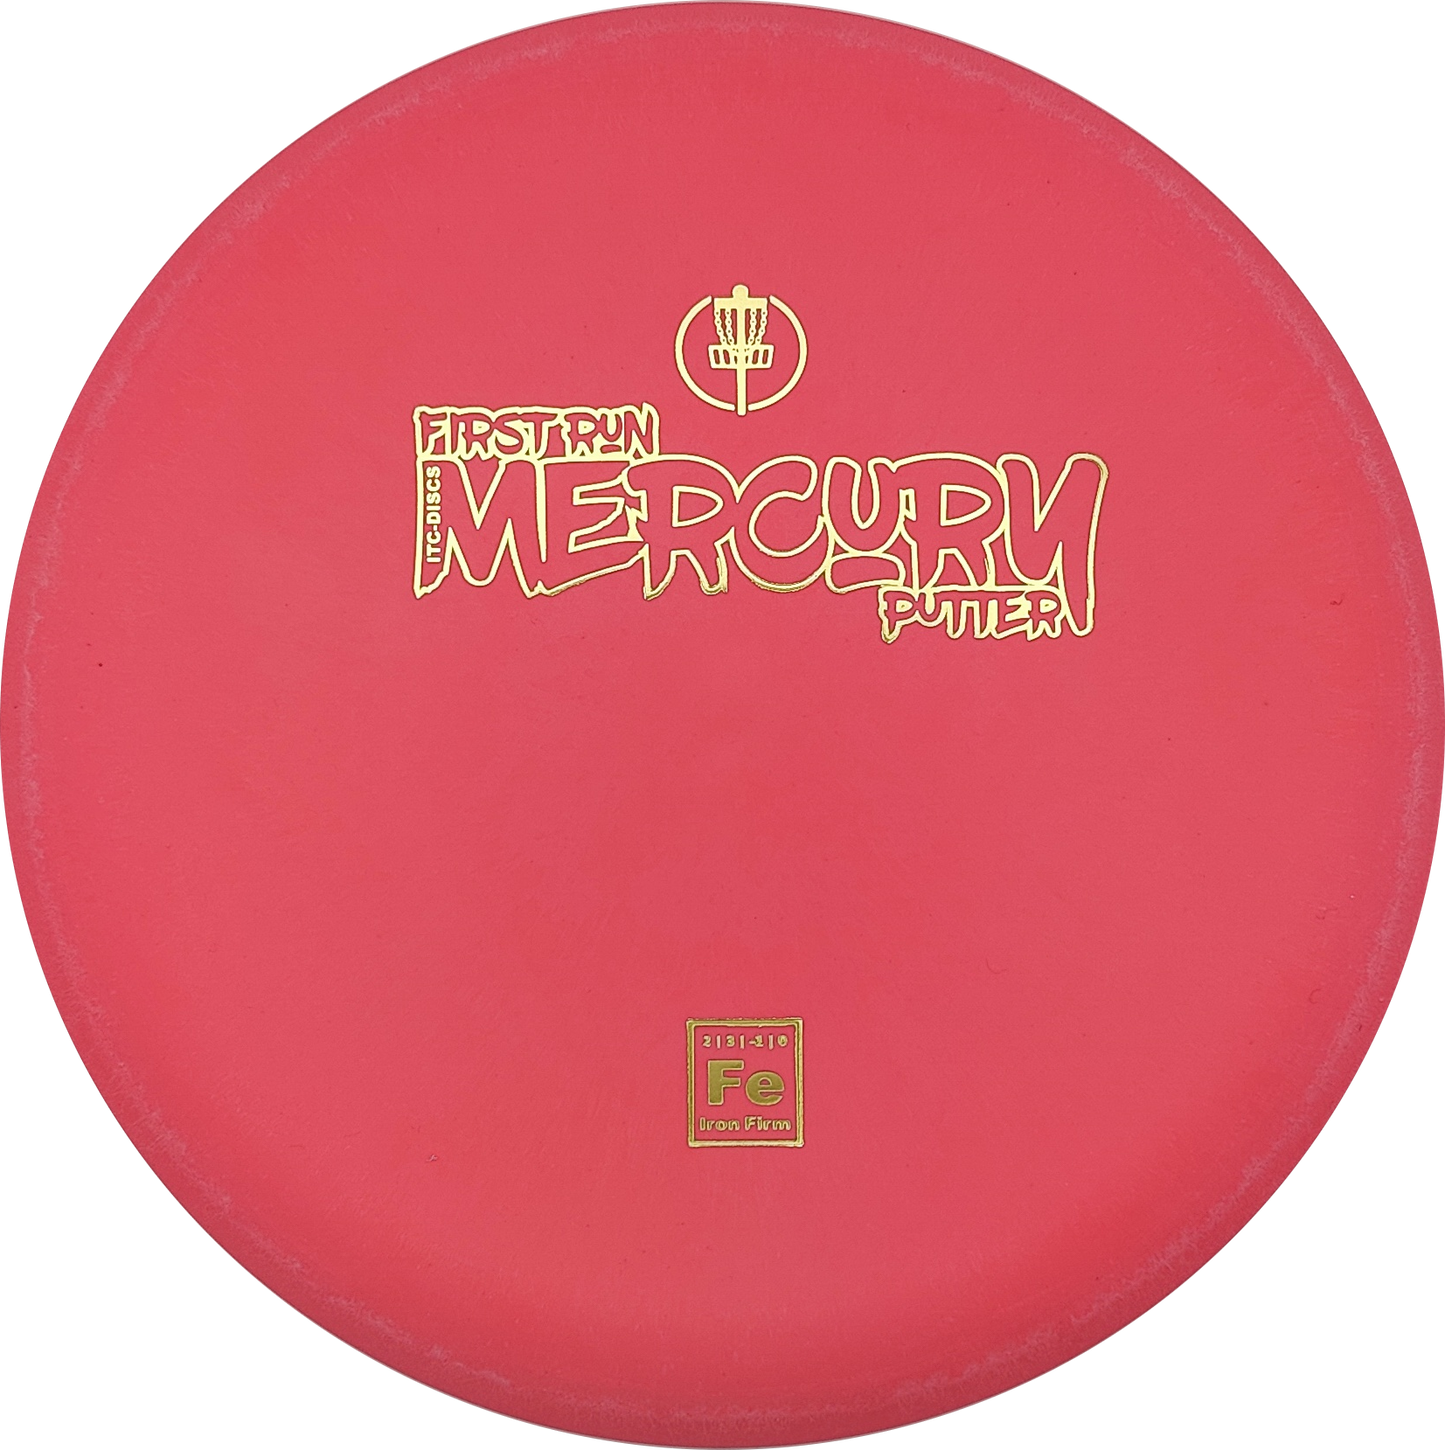 10er Pack ITC Discs Mercury Iron Firm